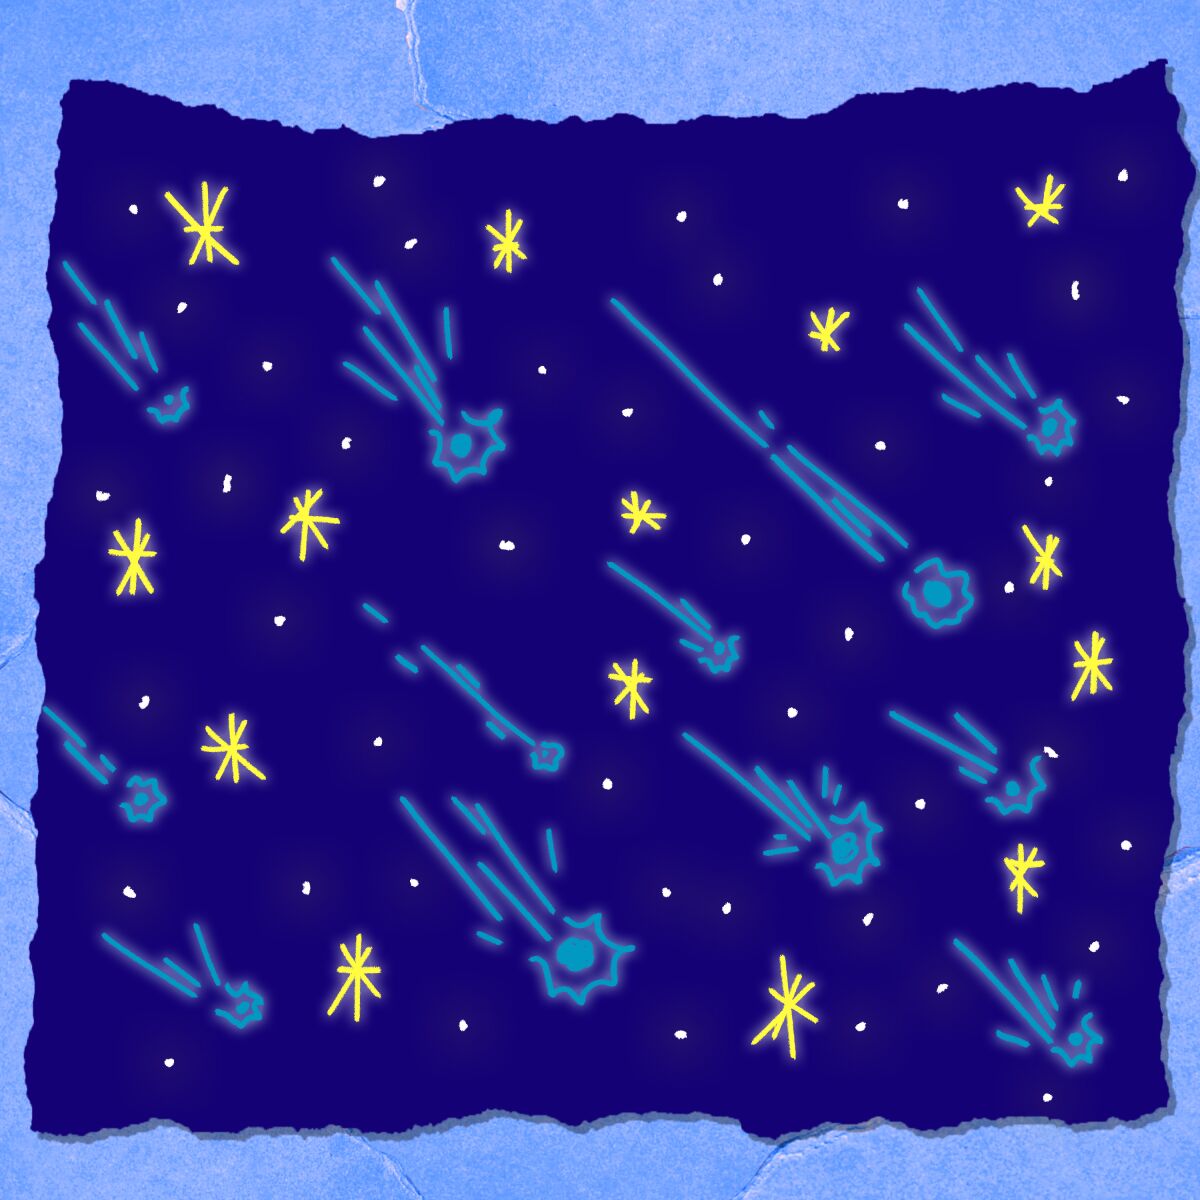 Illustration of a comet shower on a navy blue background.